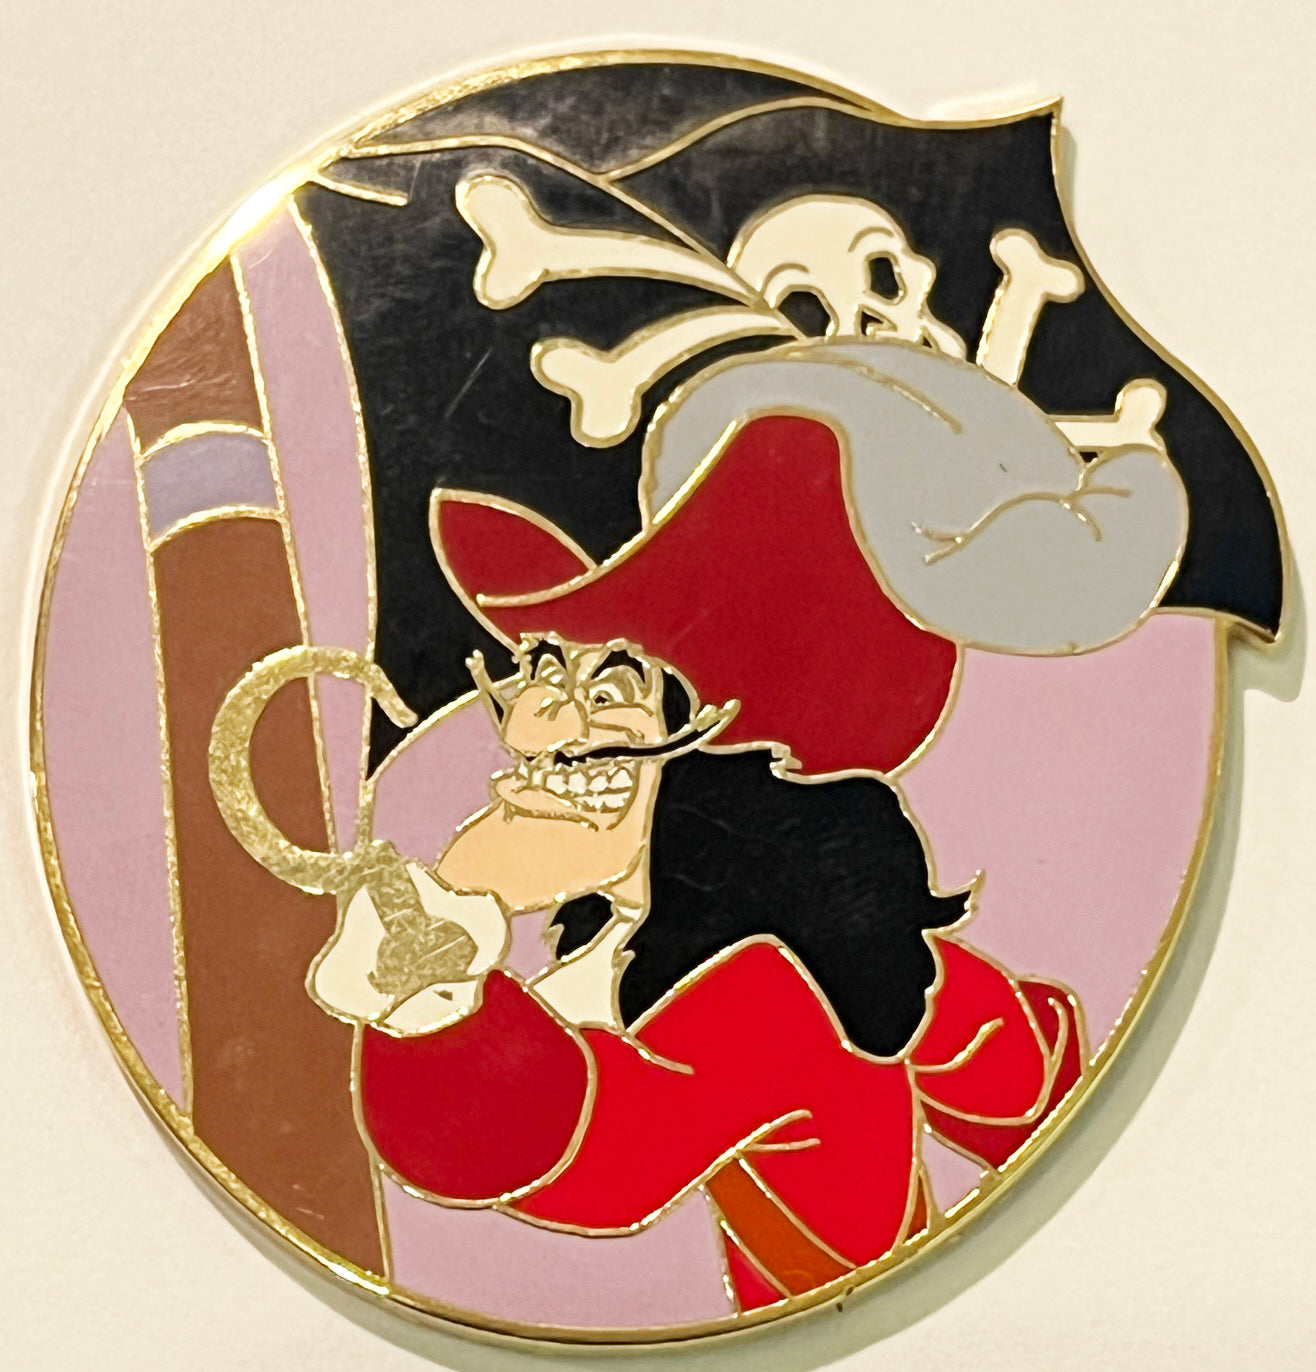 Captain Hook & Pirate Flag Peter Pan Auctions Disney Pin B04